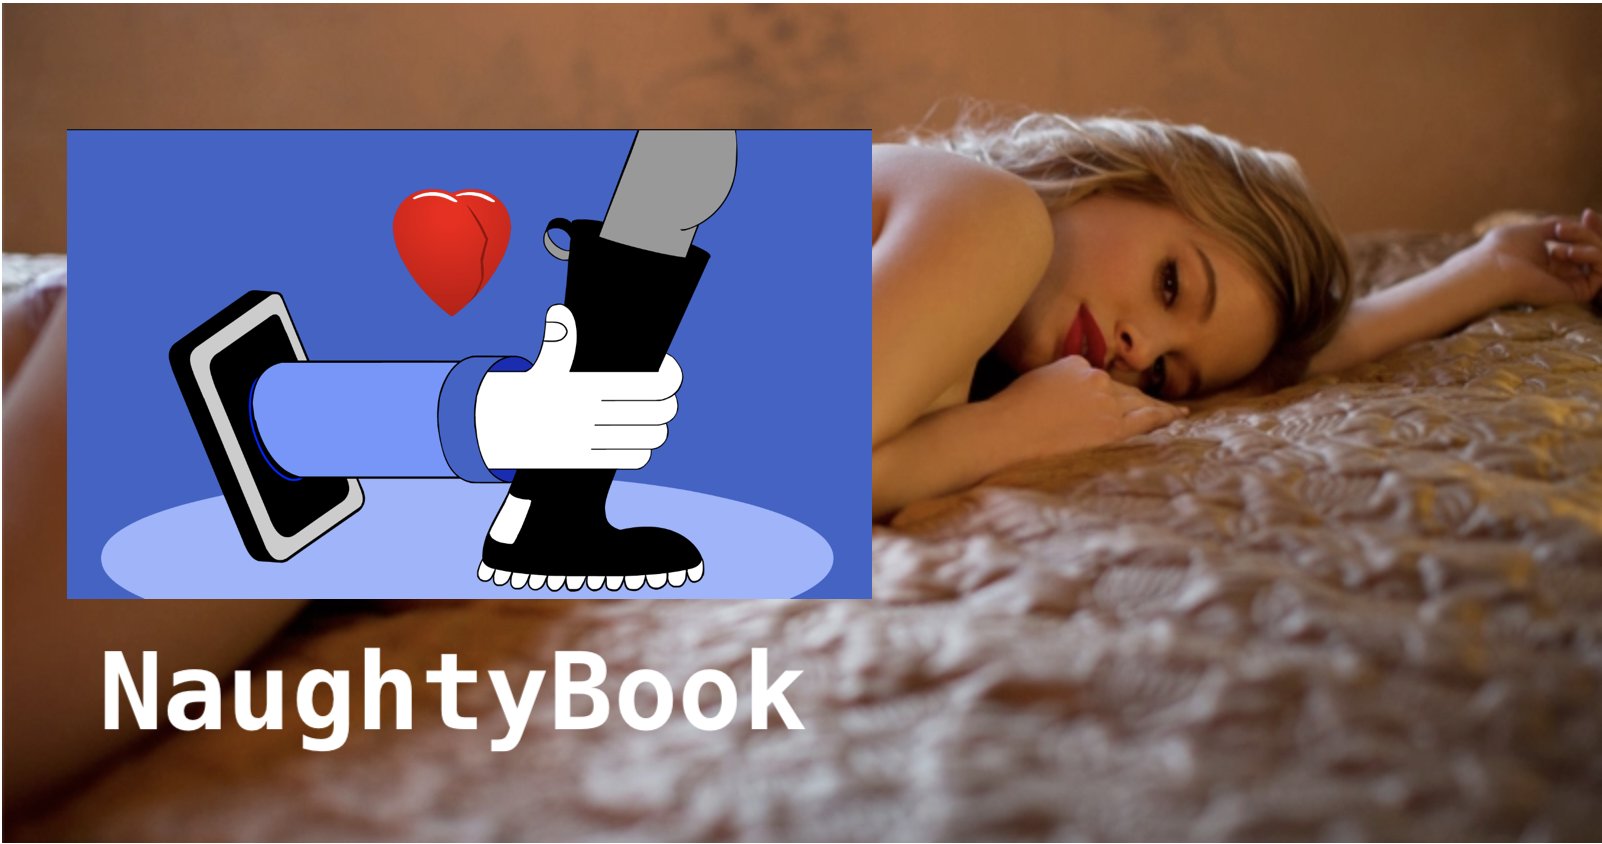 FACEBOOK: SEND US YOUR NUDES TO STOP “REVENGE PORN” #Facebook #NudePics #NaughtyBook